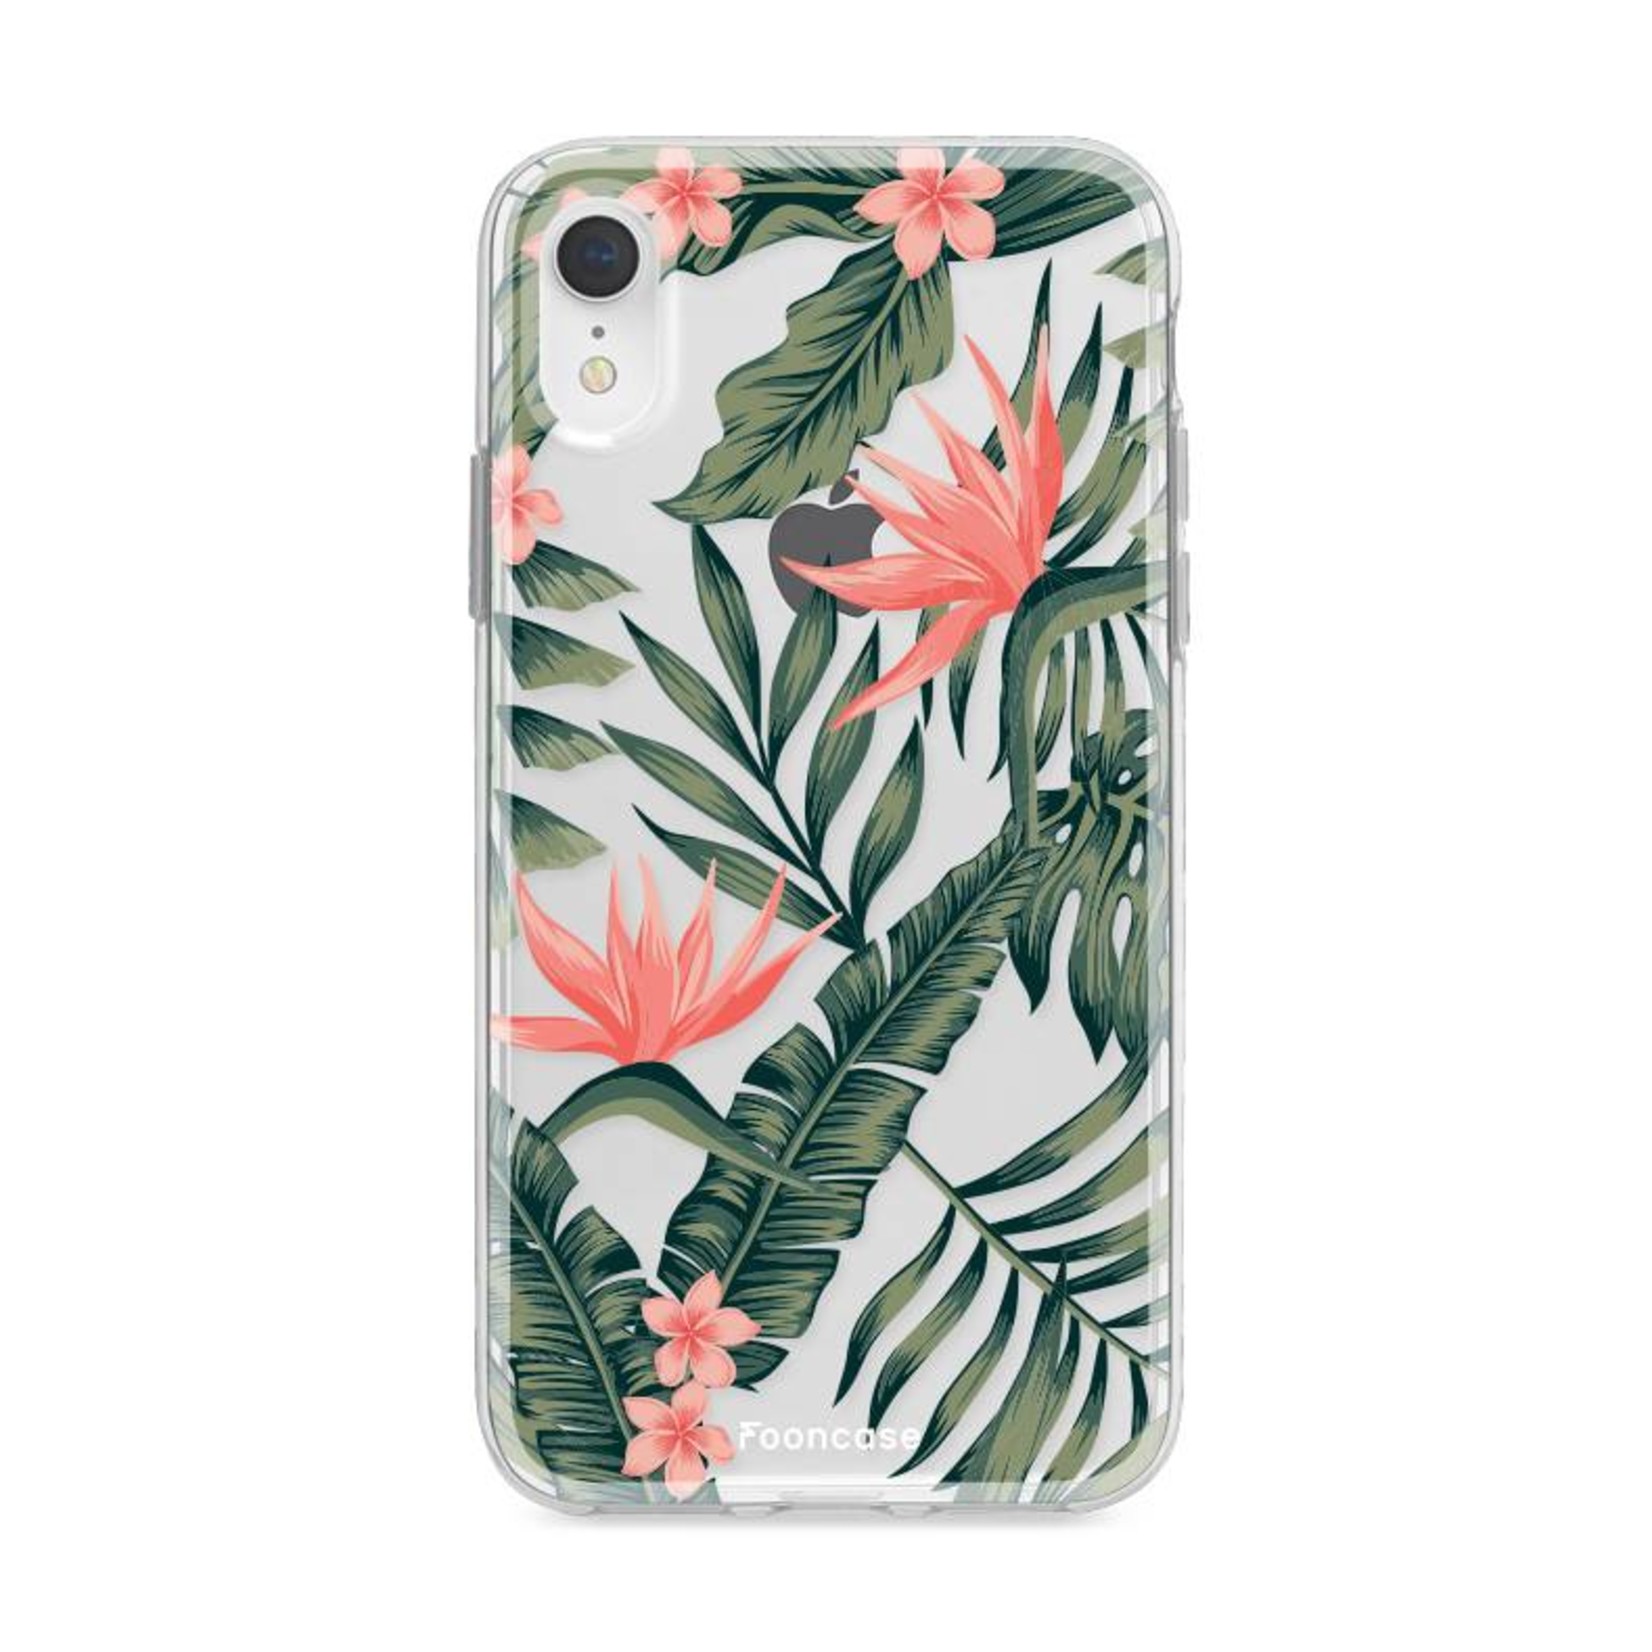 FOONCASE Iphone XR Phone Case - Tropical Desire